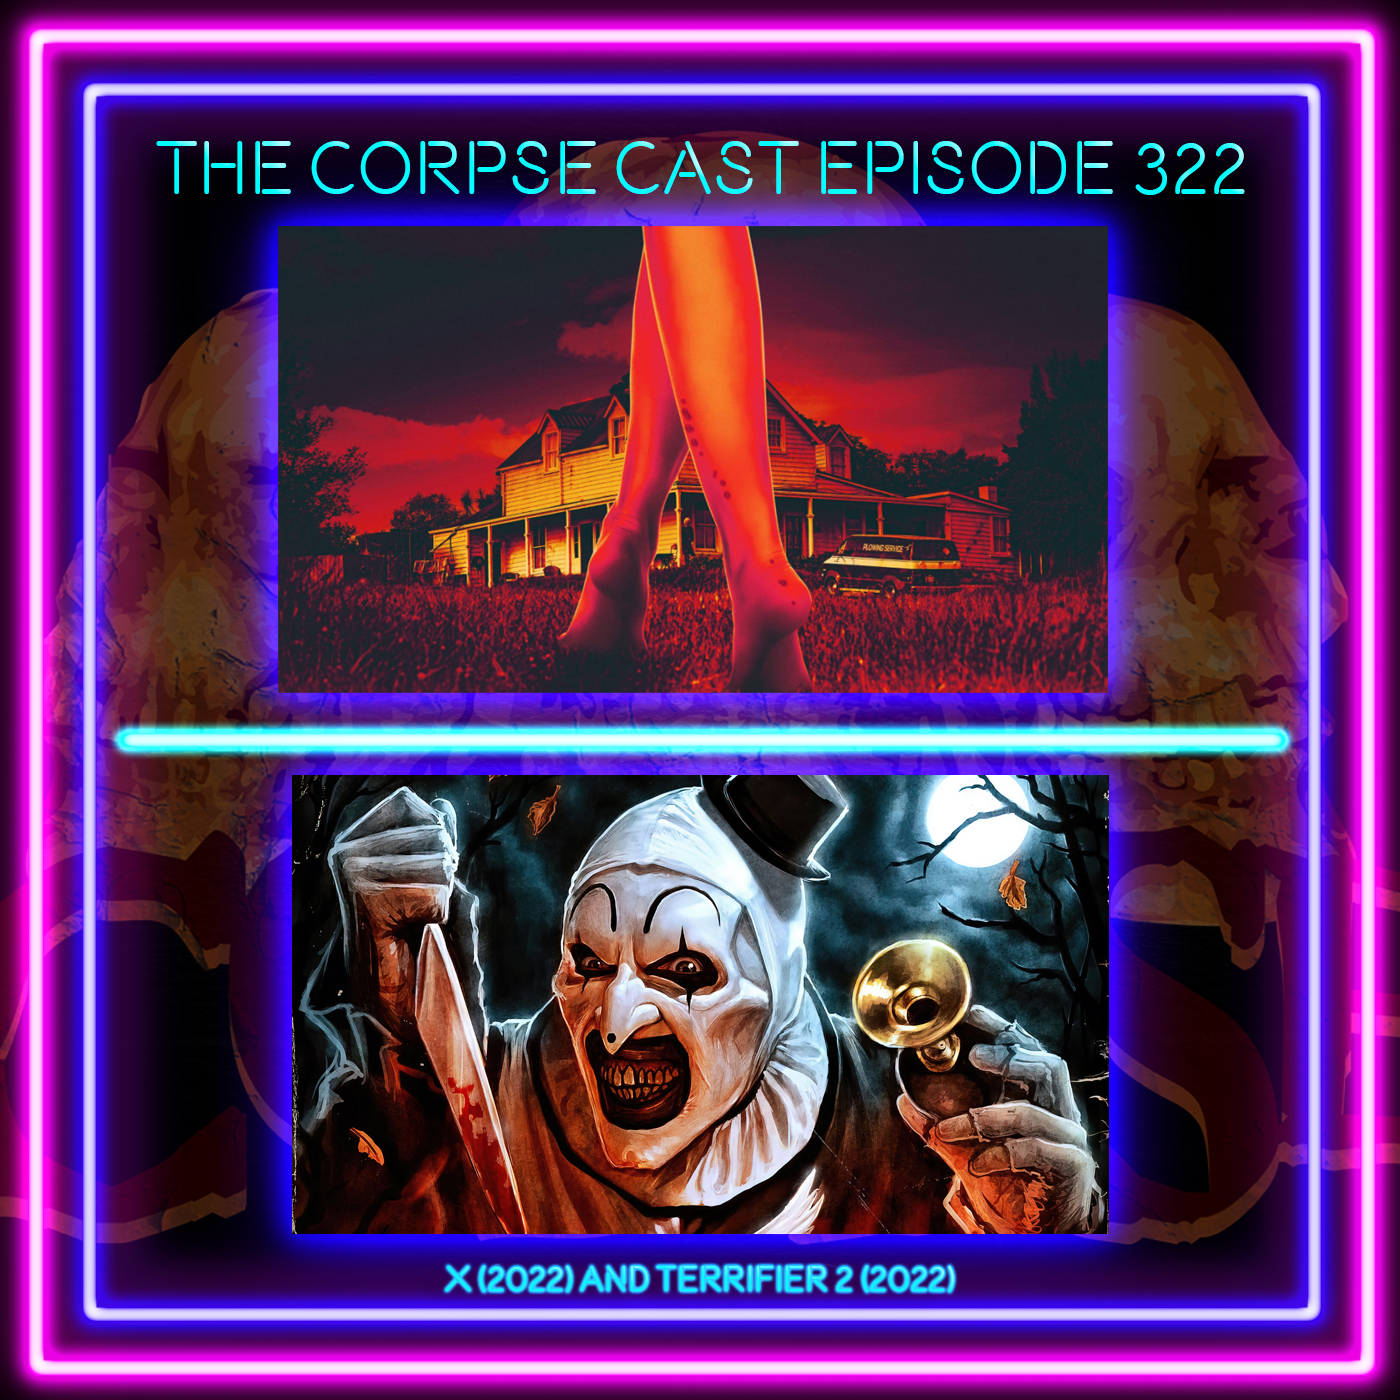 Corpse Cast Episode 322: X – (2022) and Terrifier 2 (2022)